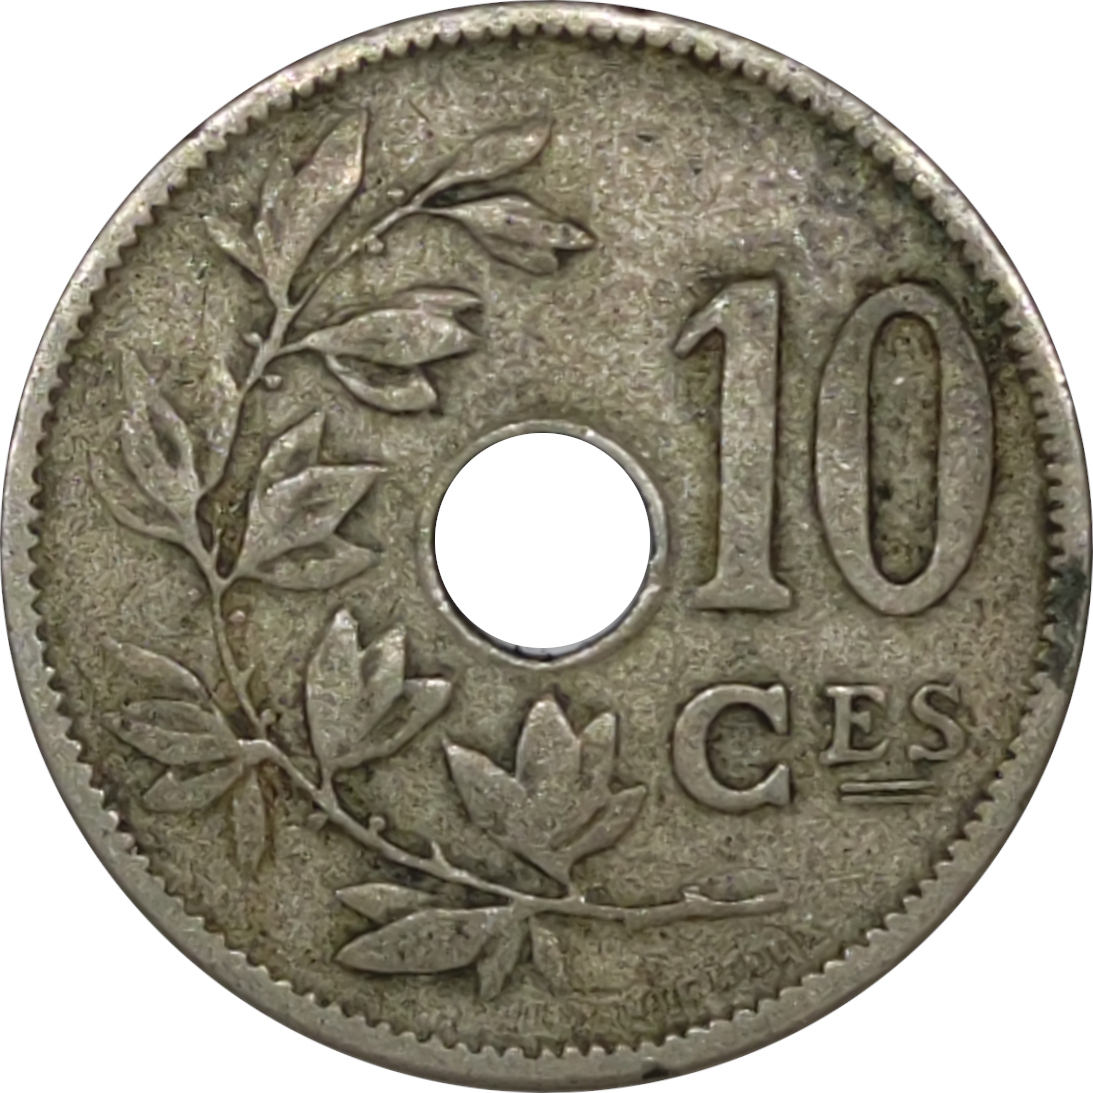 10 centimes - Leopold II - Michaux